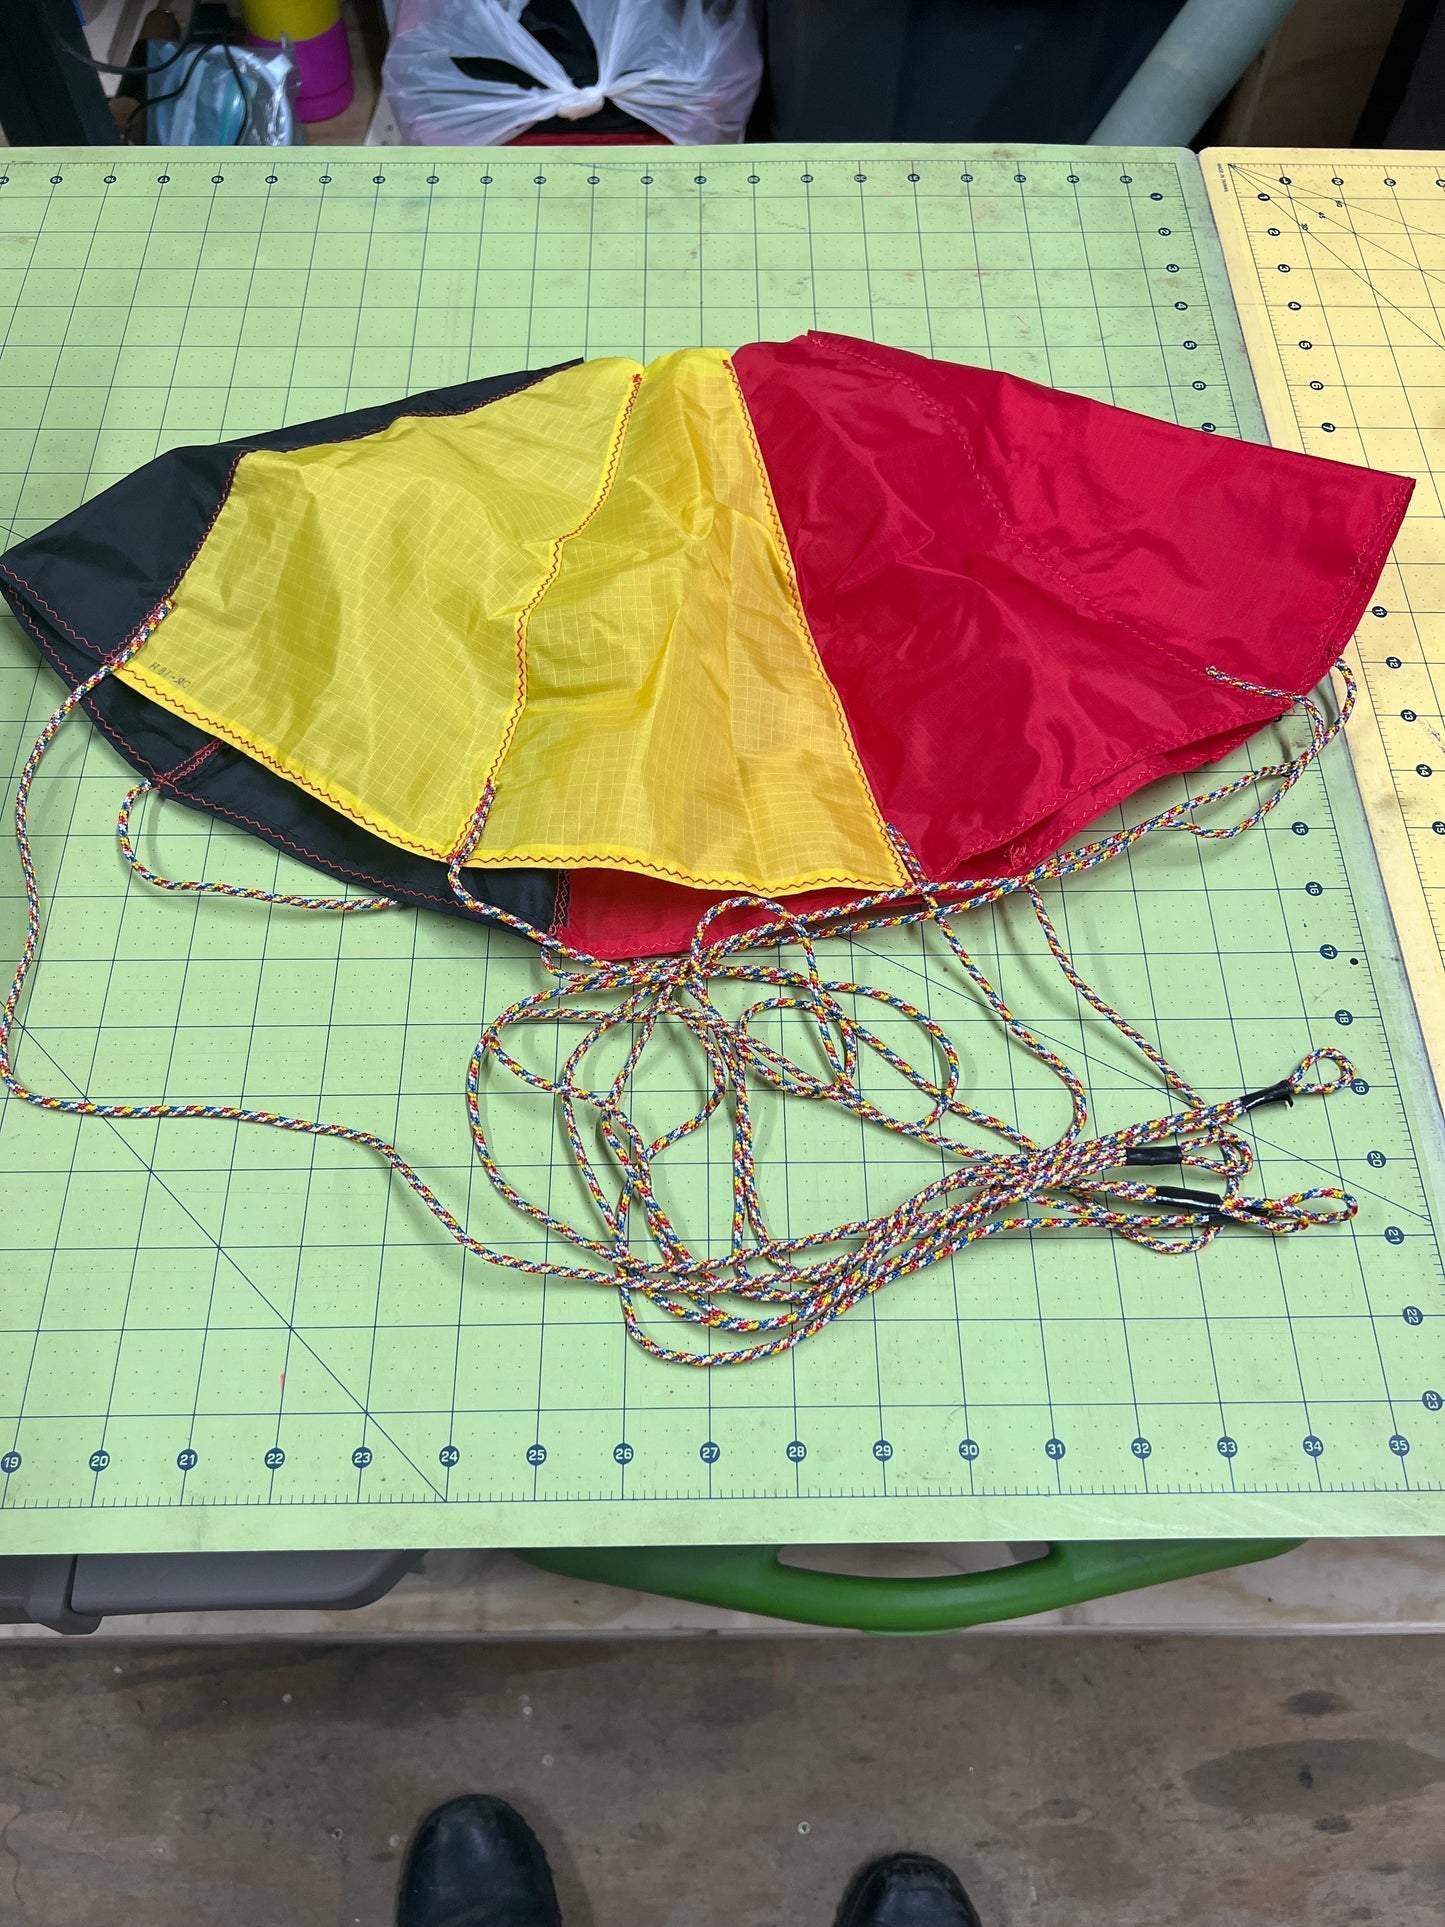 DR-H144 Semi-Hemispherical Parachute